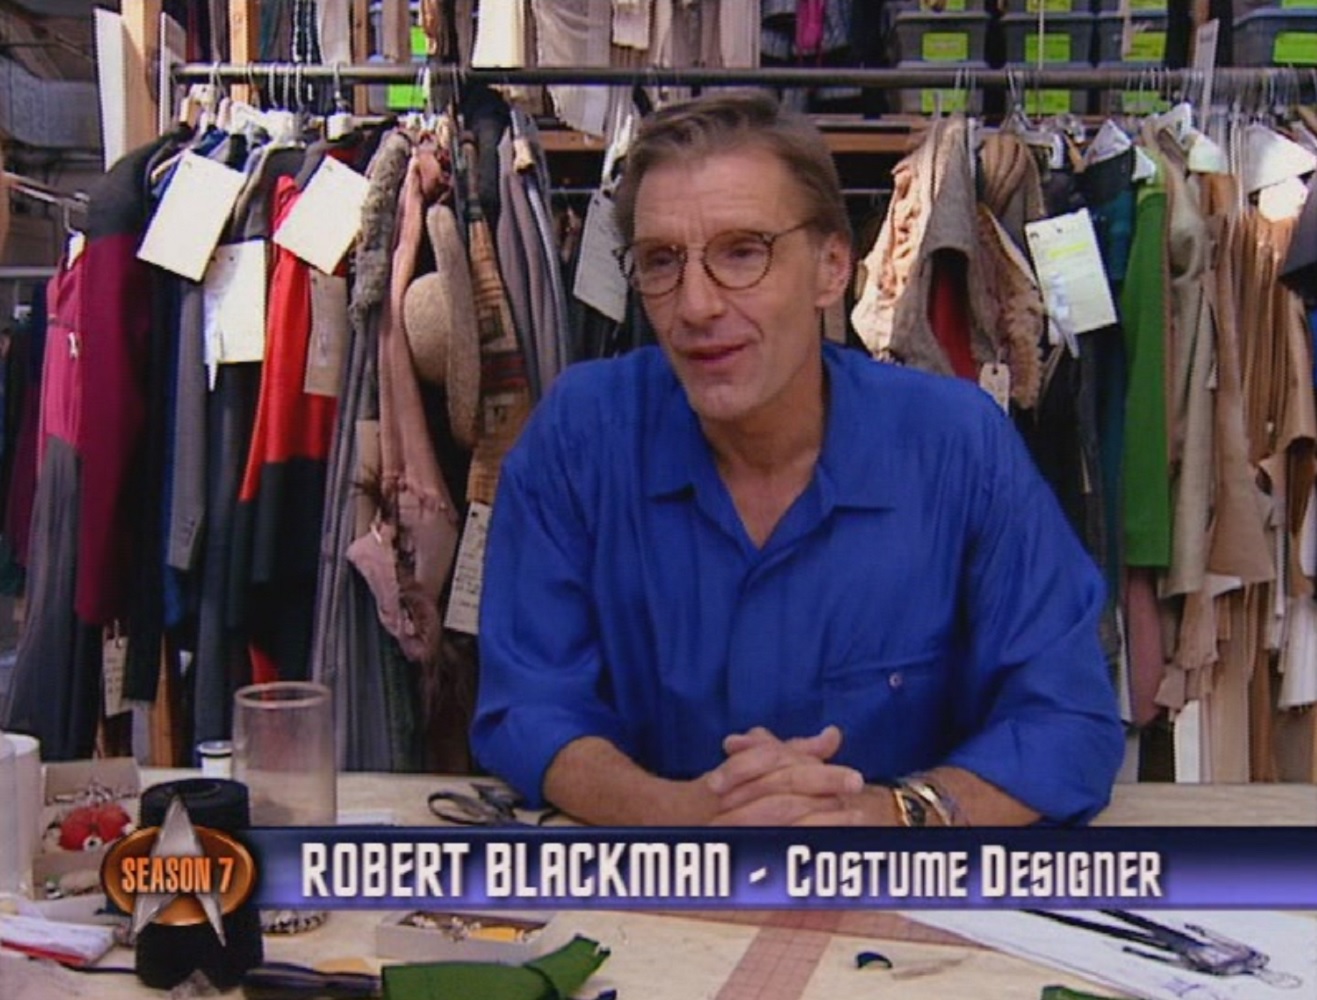 Star Trek costumes - Robert Blackman